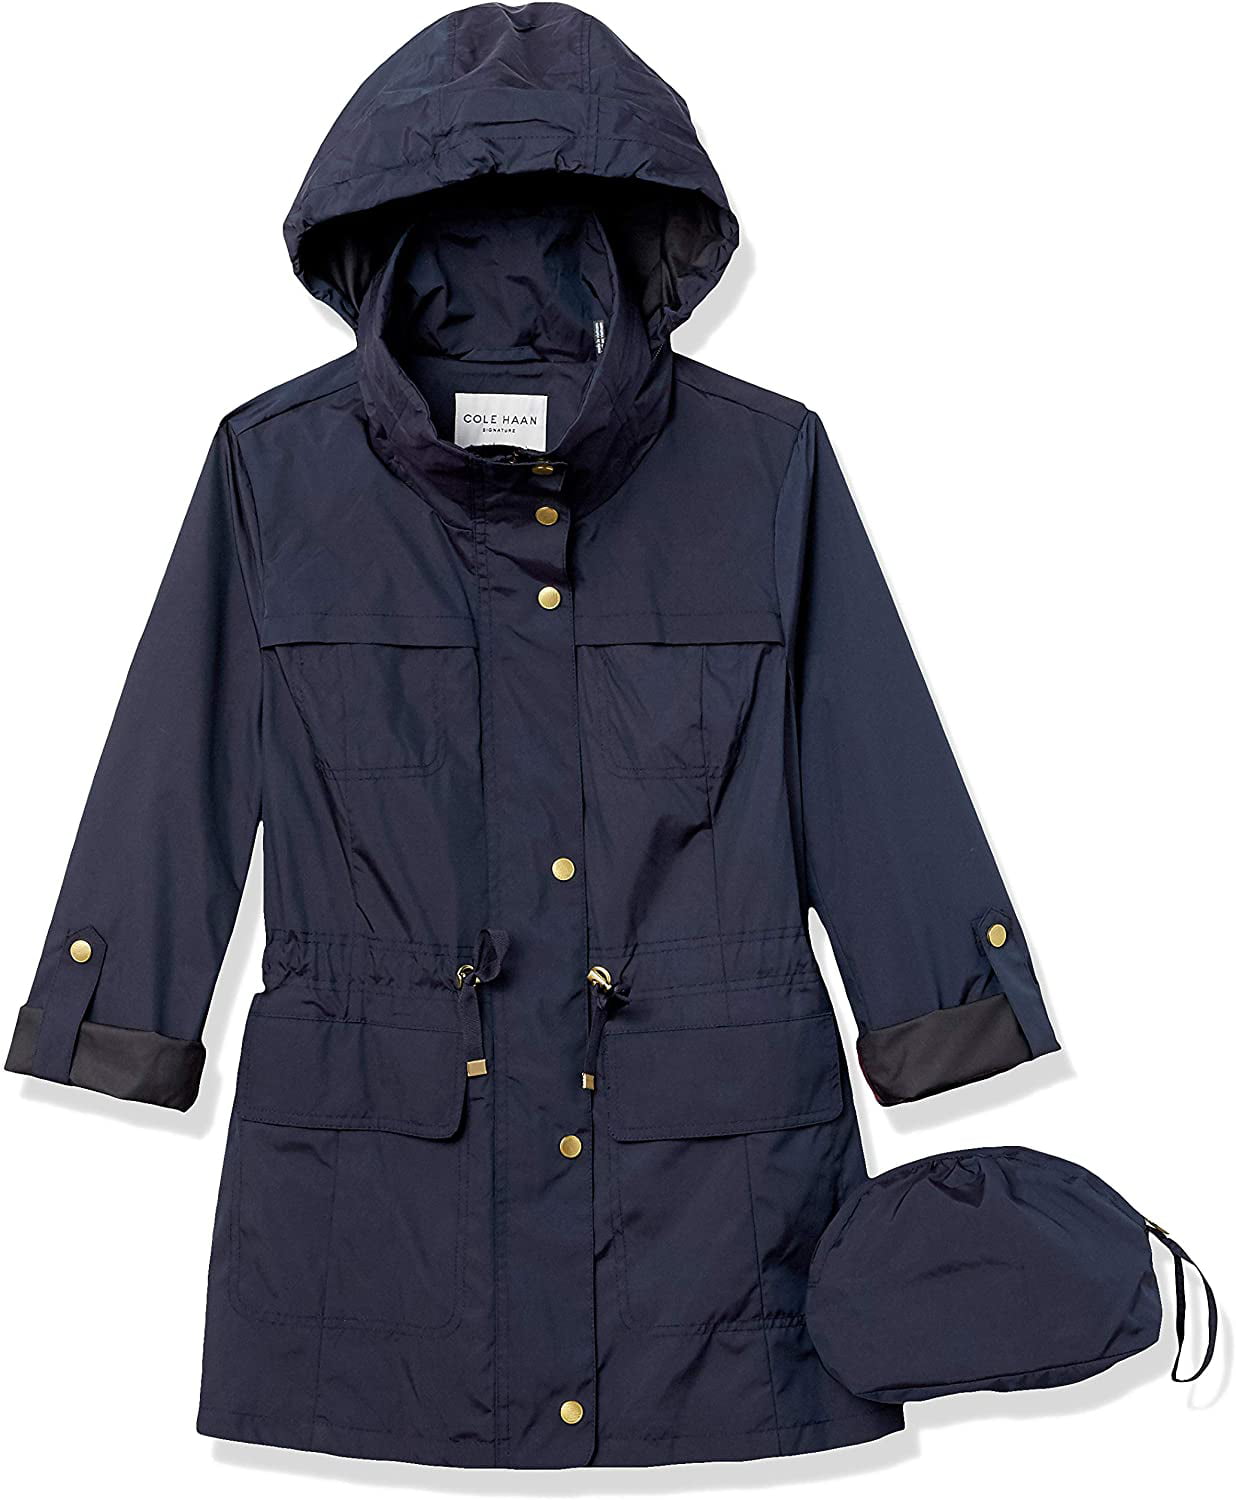 Cole Haan Womens Travel Packable Rain Jacket Large Indigo - Walmart.com